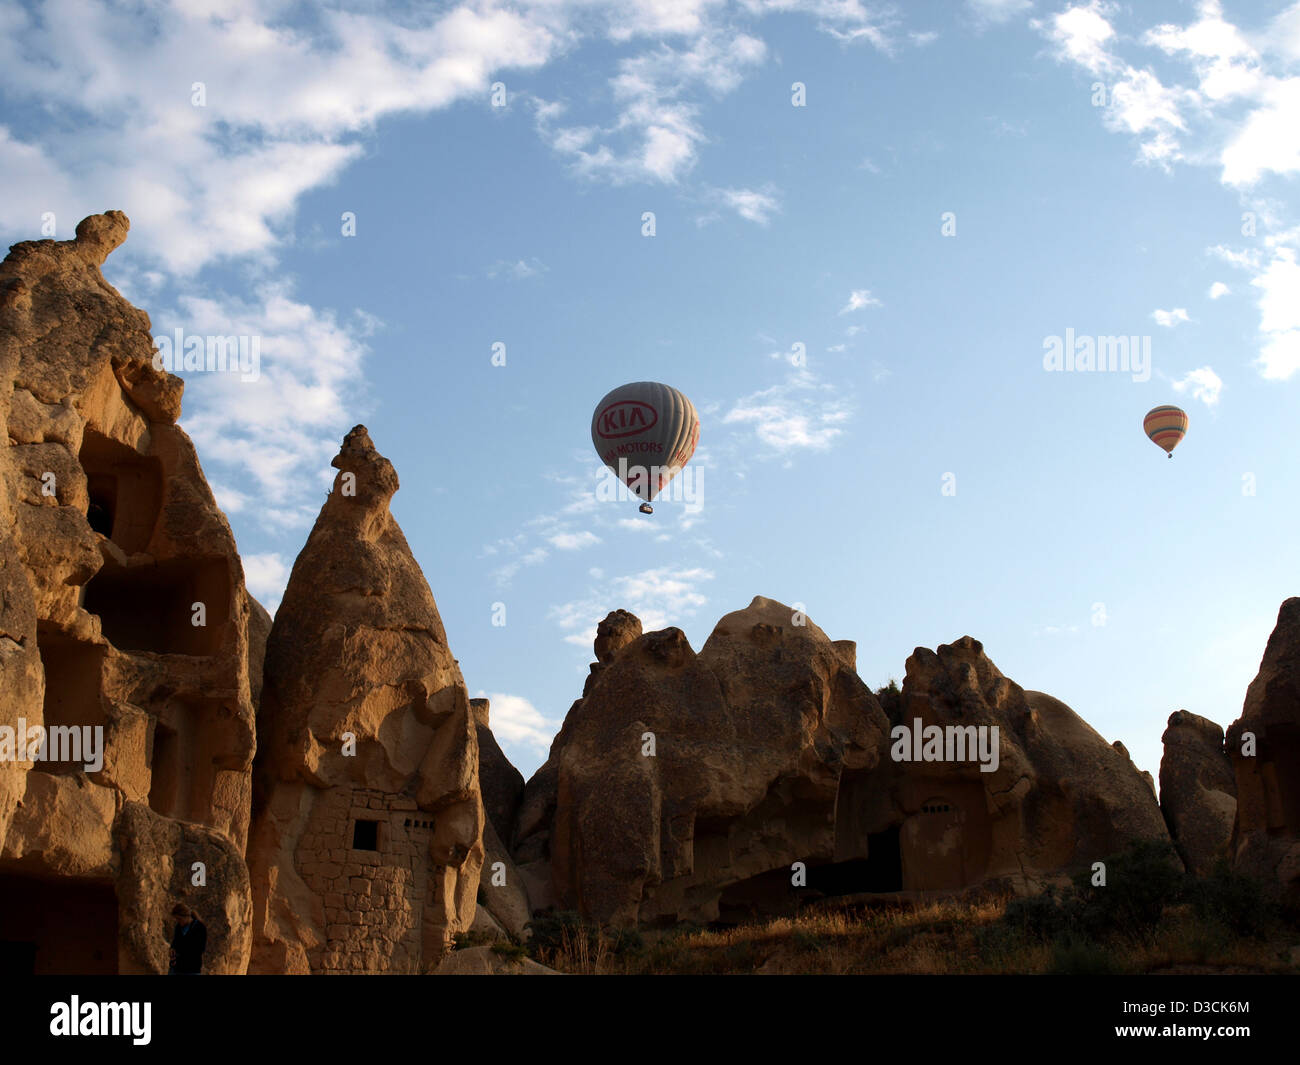 Hot air balloons flying over Cappadocia (Kapadokya), Nevsehir Province, Turkey, as World Heritage Site by UNESCO Stock Photo